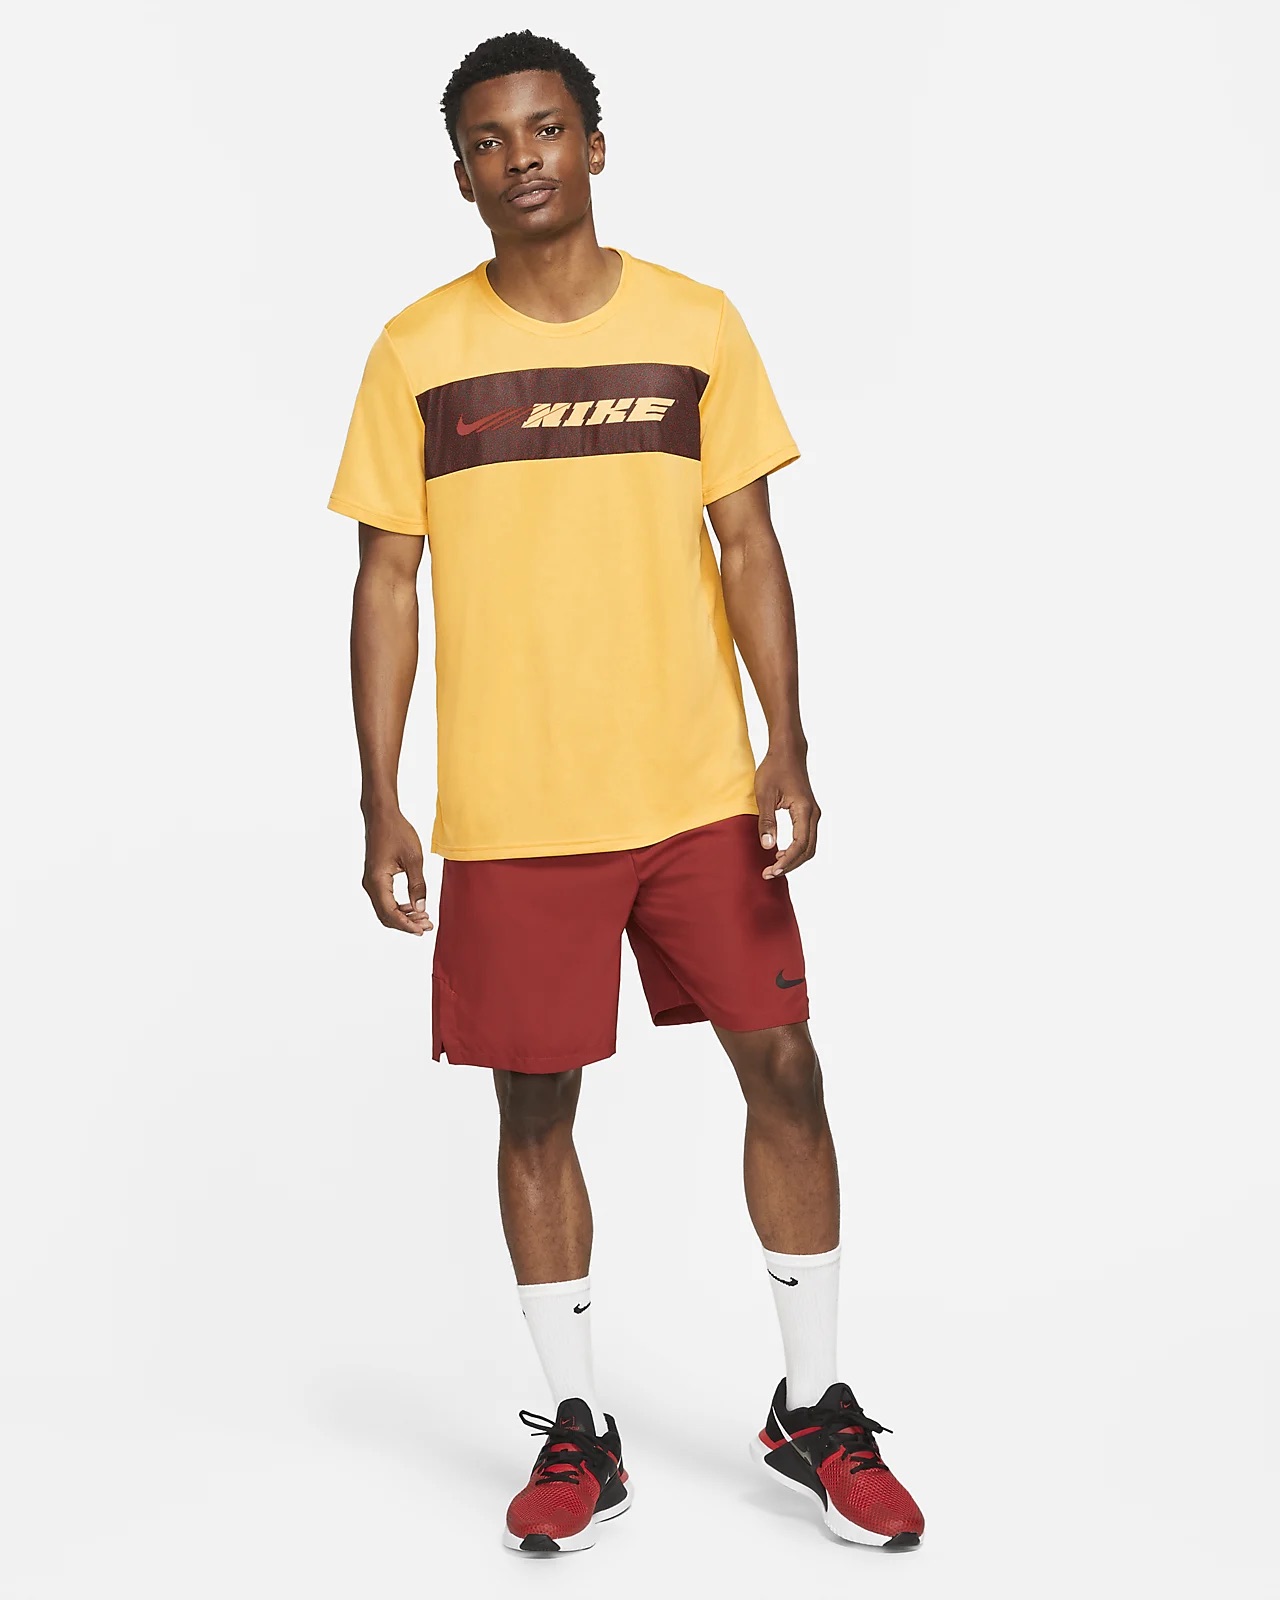 Nike Men's Dri-Fit Yellow Sport Clash Superset Training T-Shirt | The ...